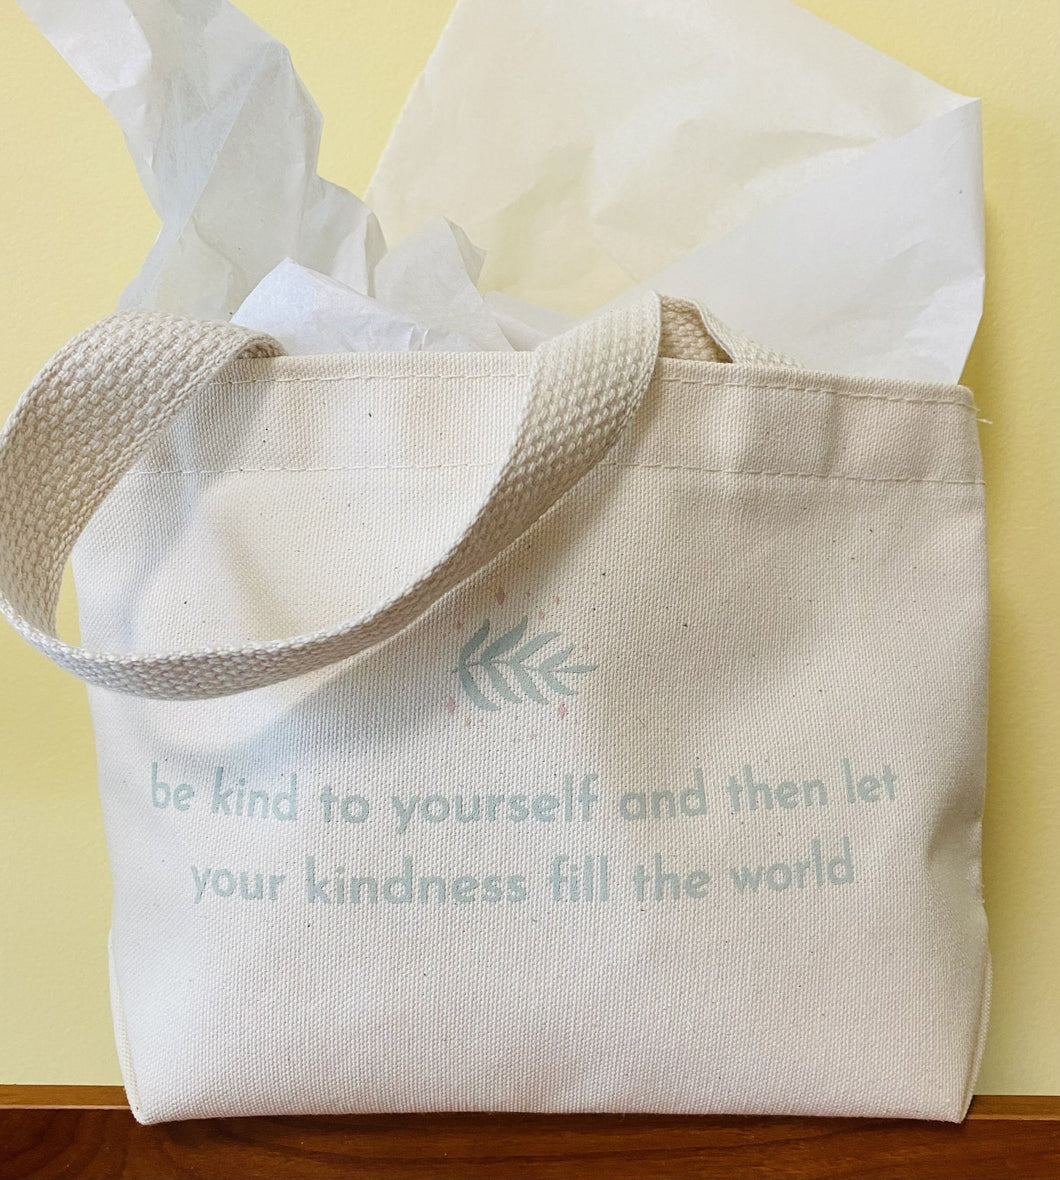 Kindness Tote Bag